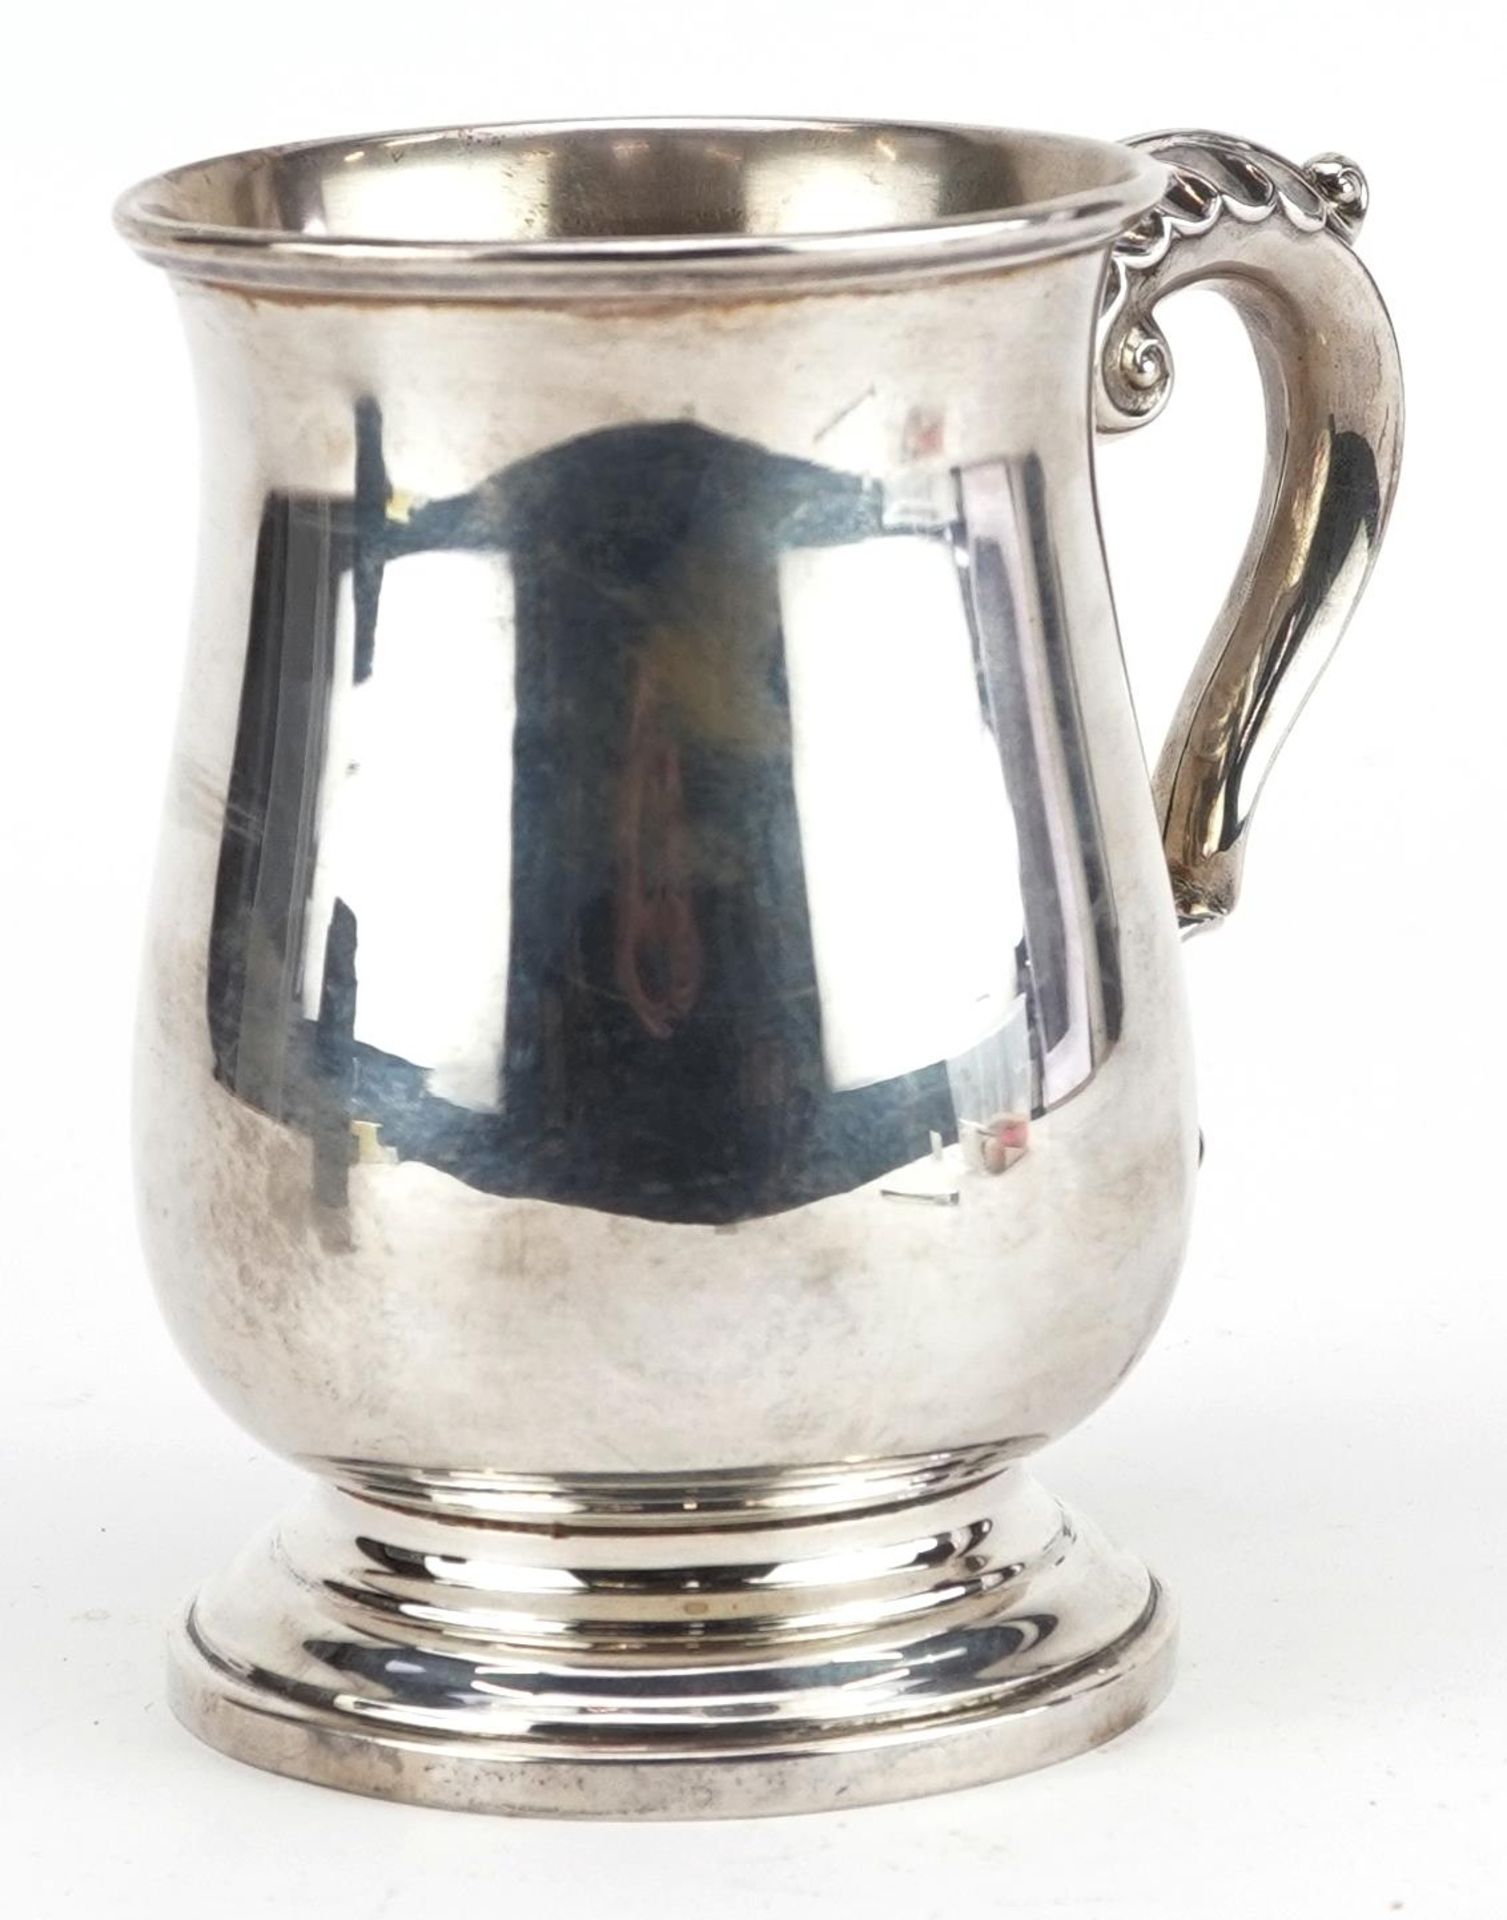 Turner & Simpson Ltd, silver one pint tankard, Birmingham 1936, 13cm high, 319.0g : For further